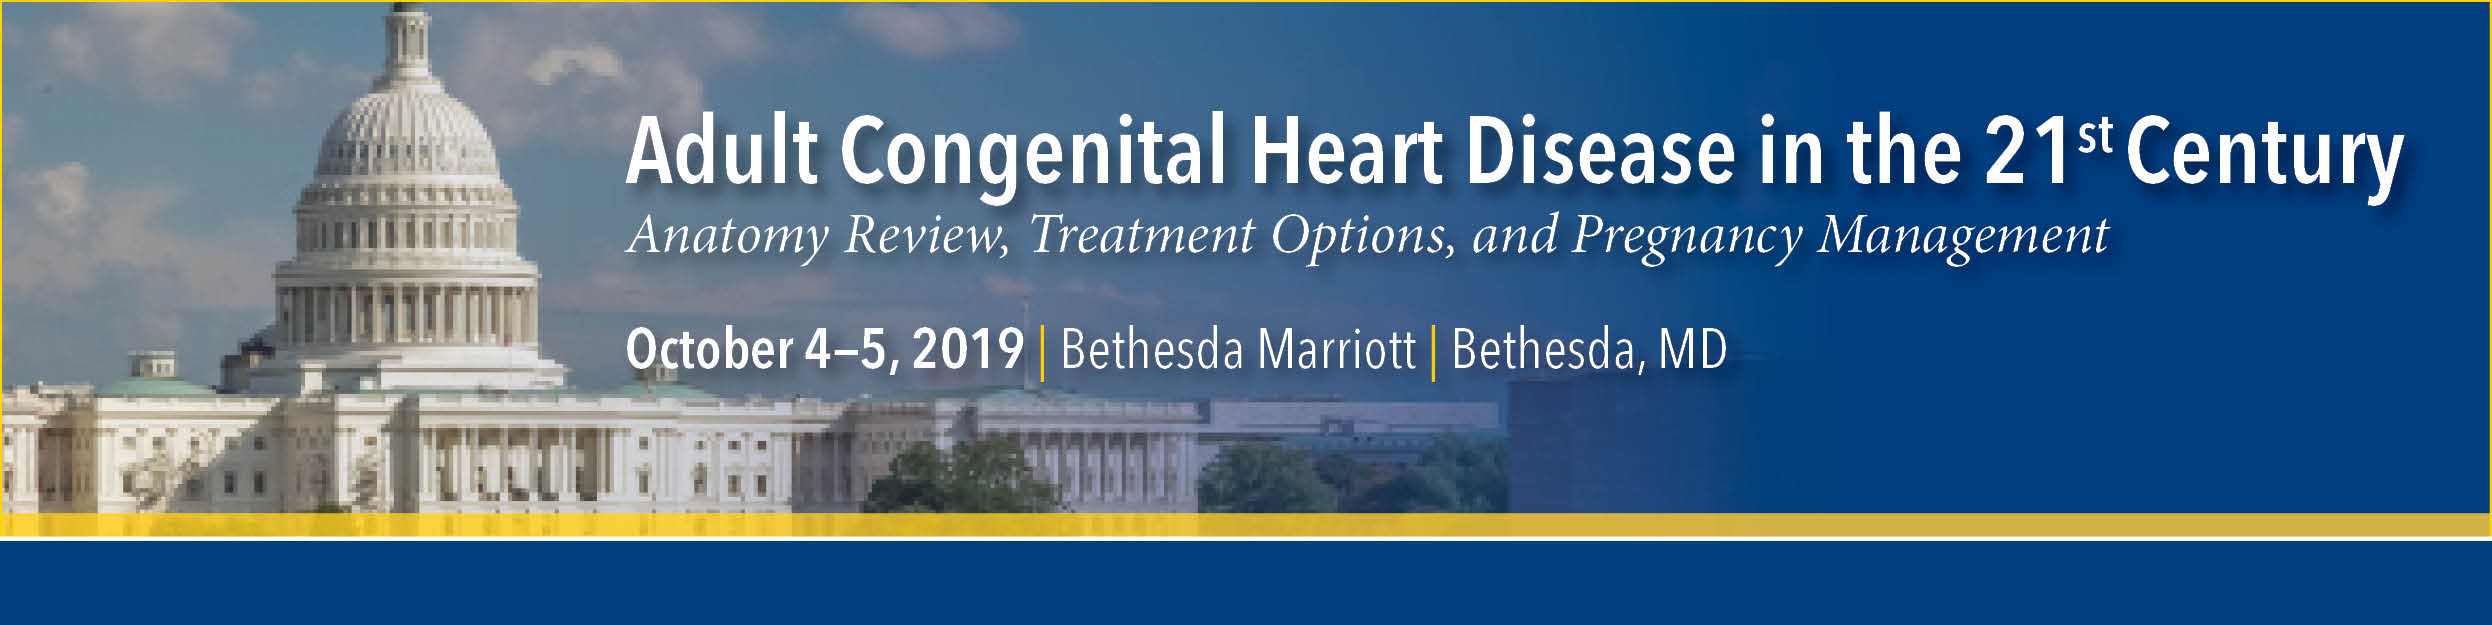 Adult Congenital Heart Disease 2019 (ACHD) Banner